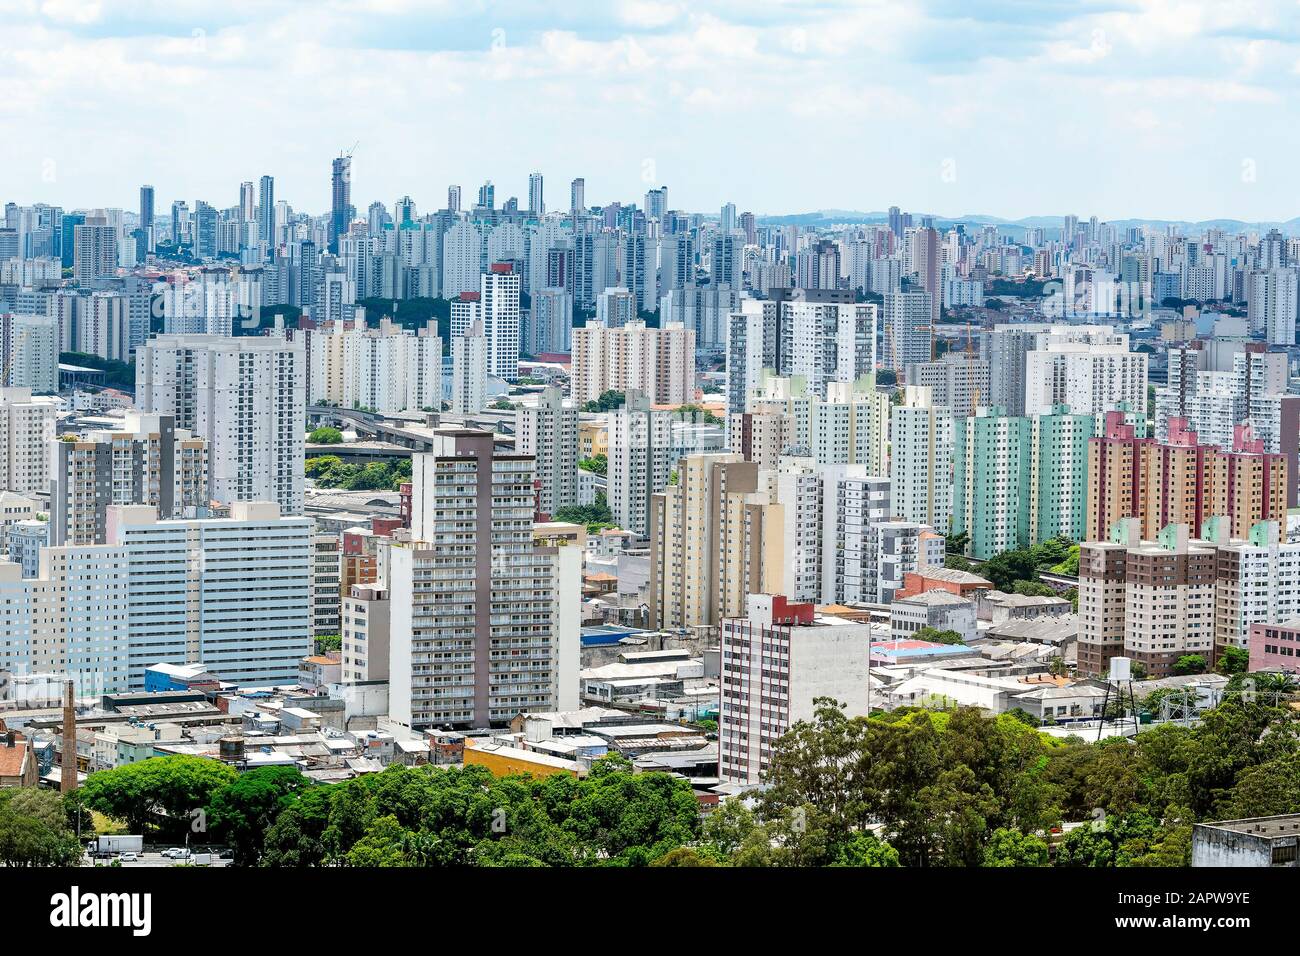 Aerial view of Bras neighborhood region of the city of Sao Paulo